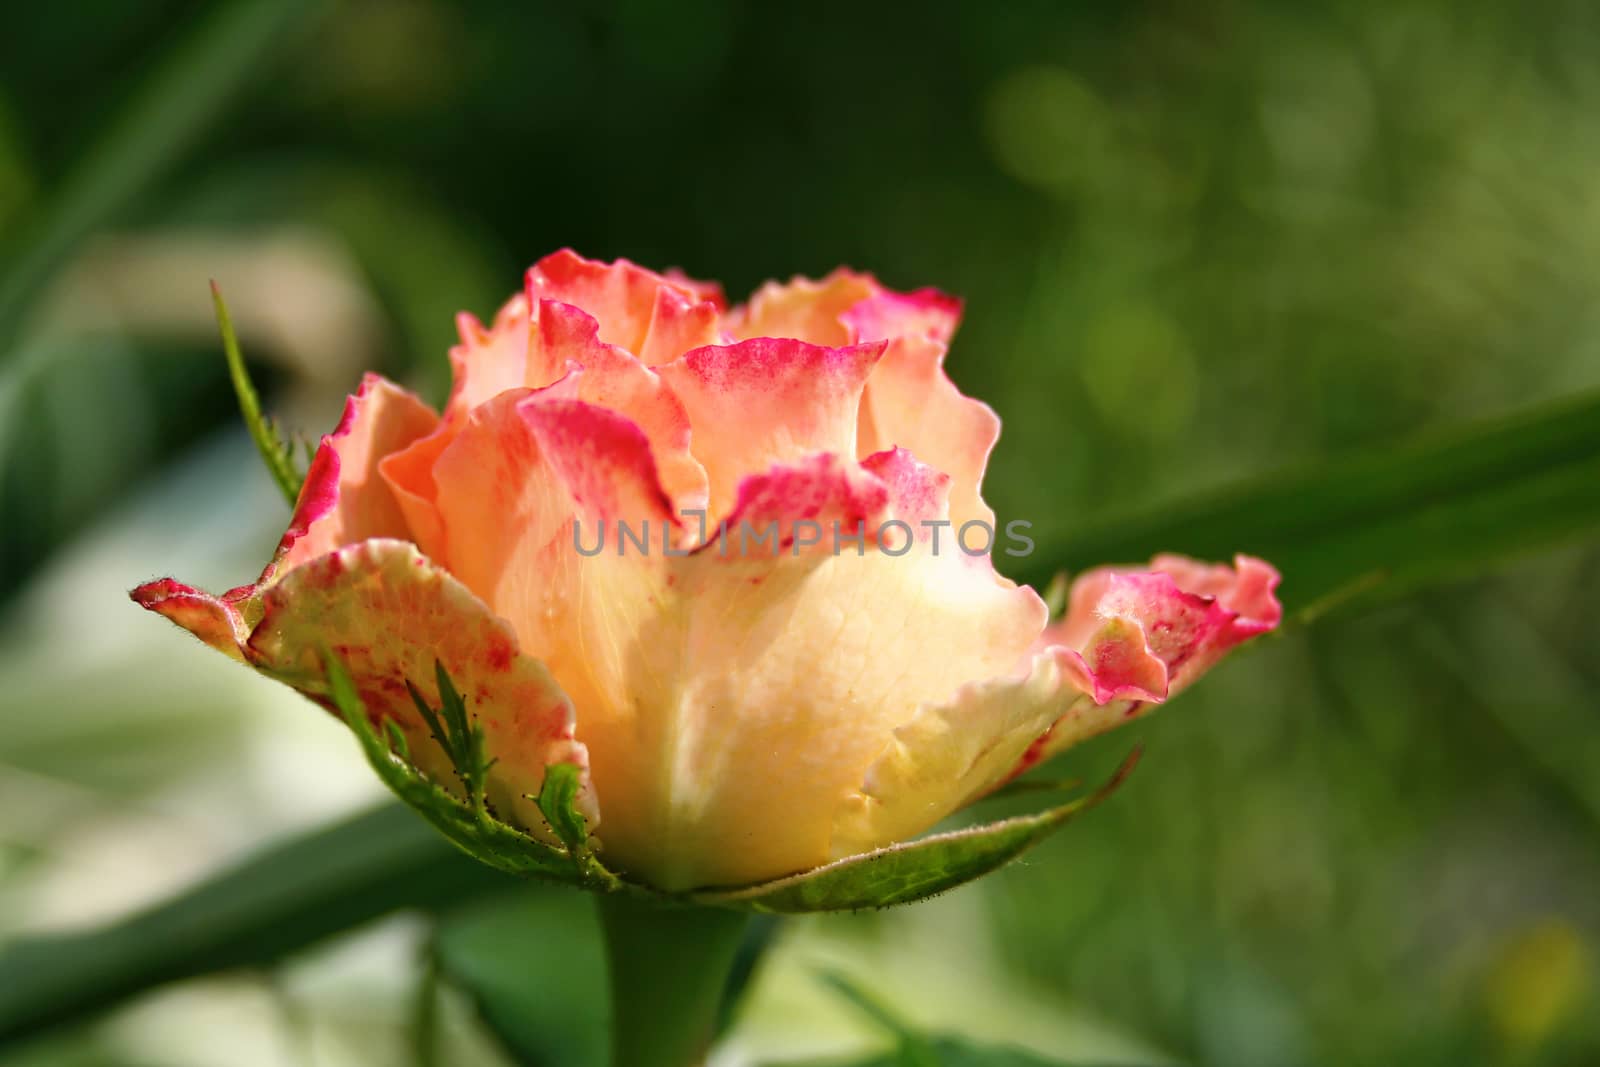 Closeup view of garden rose with defocused bokeh background